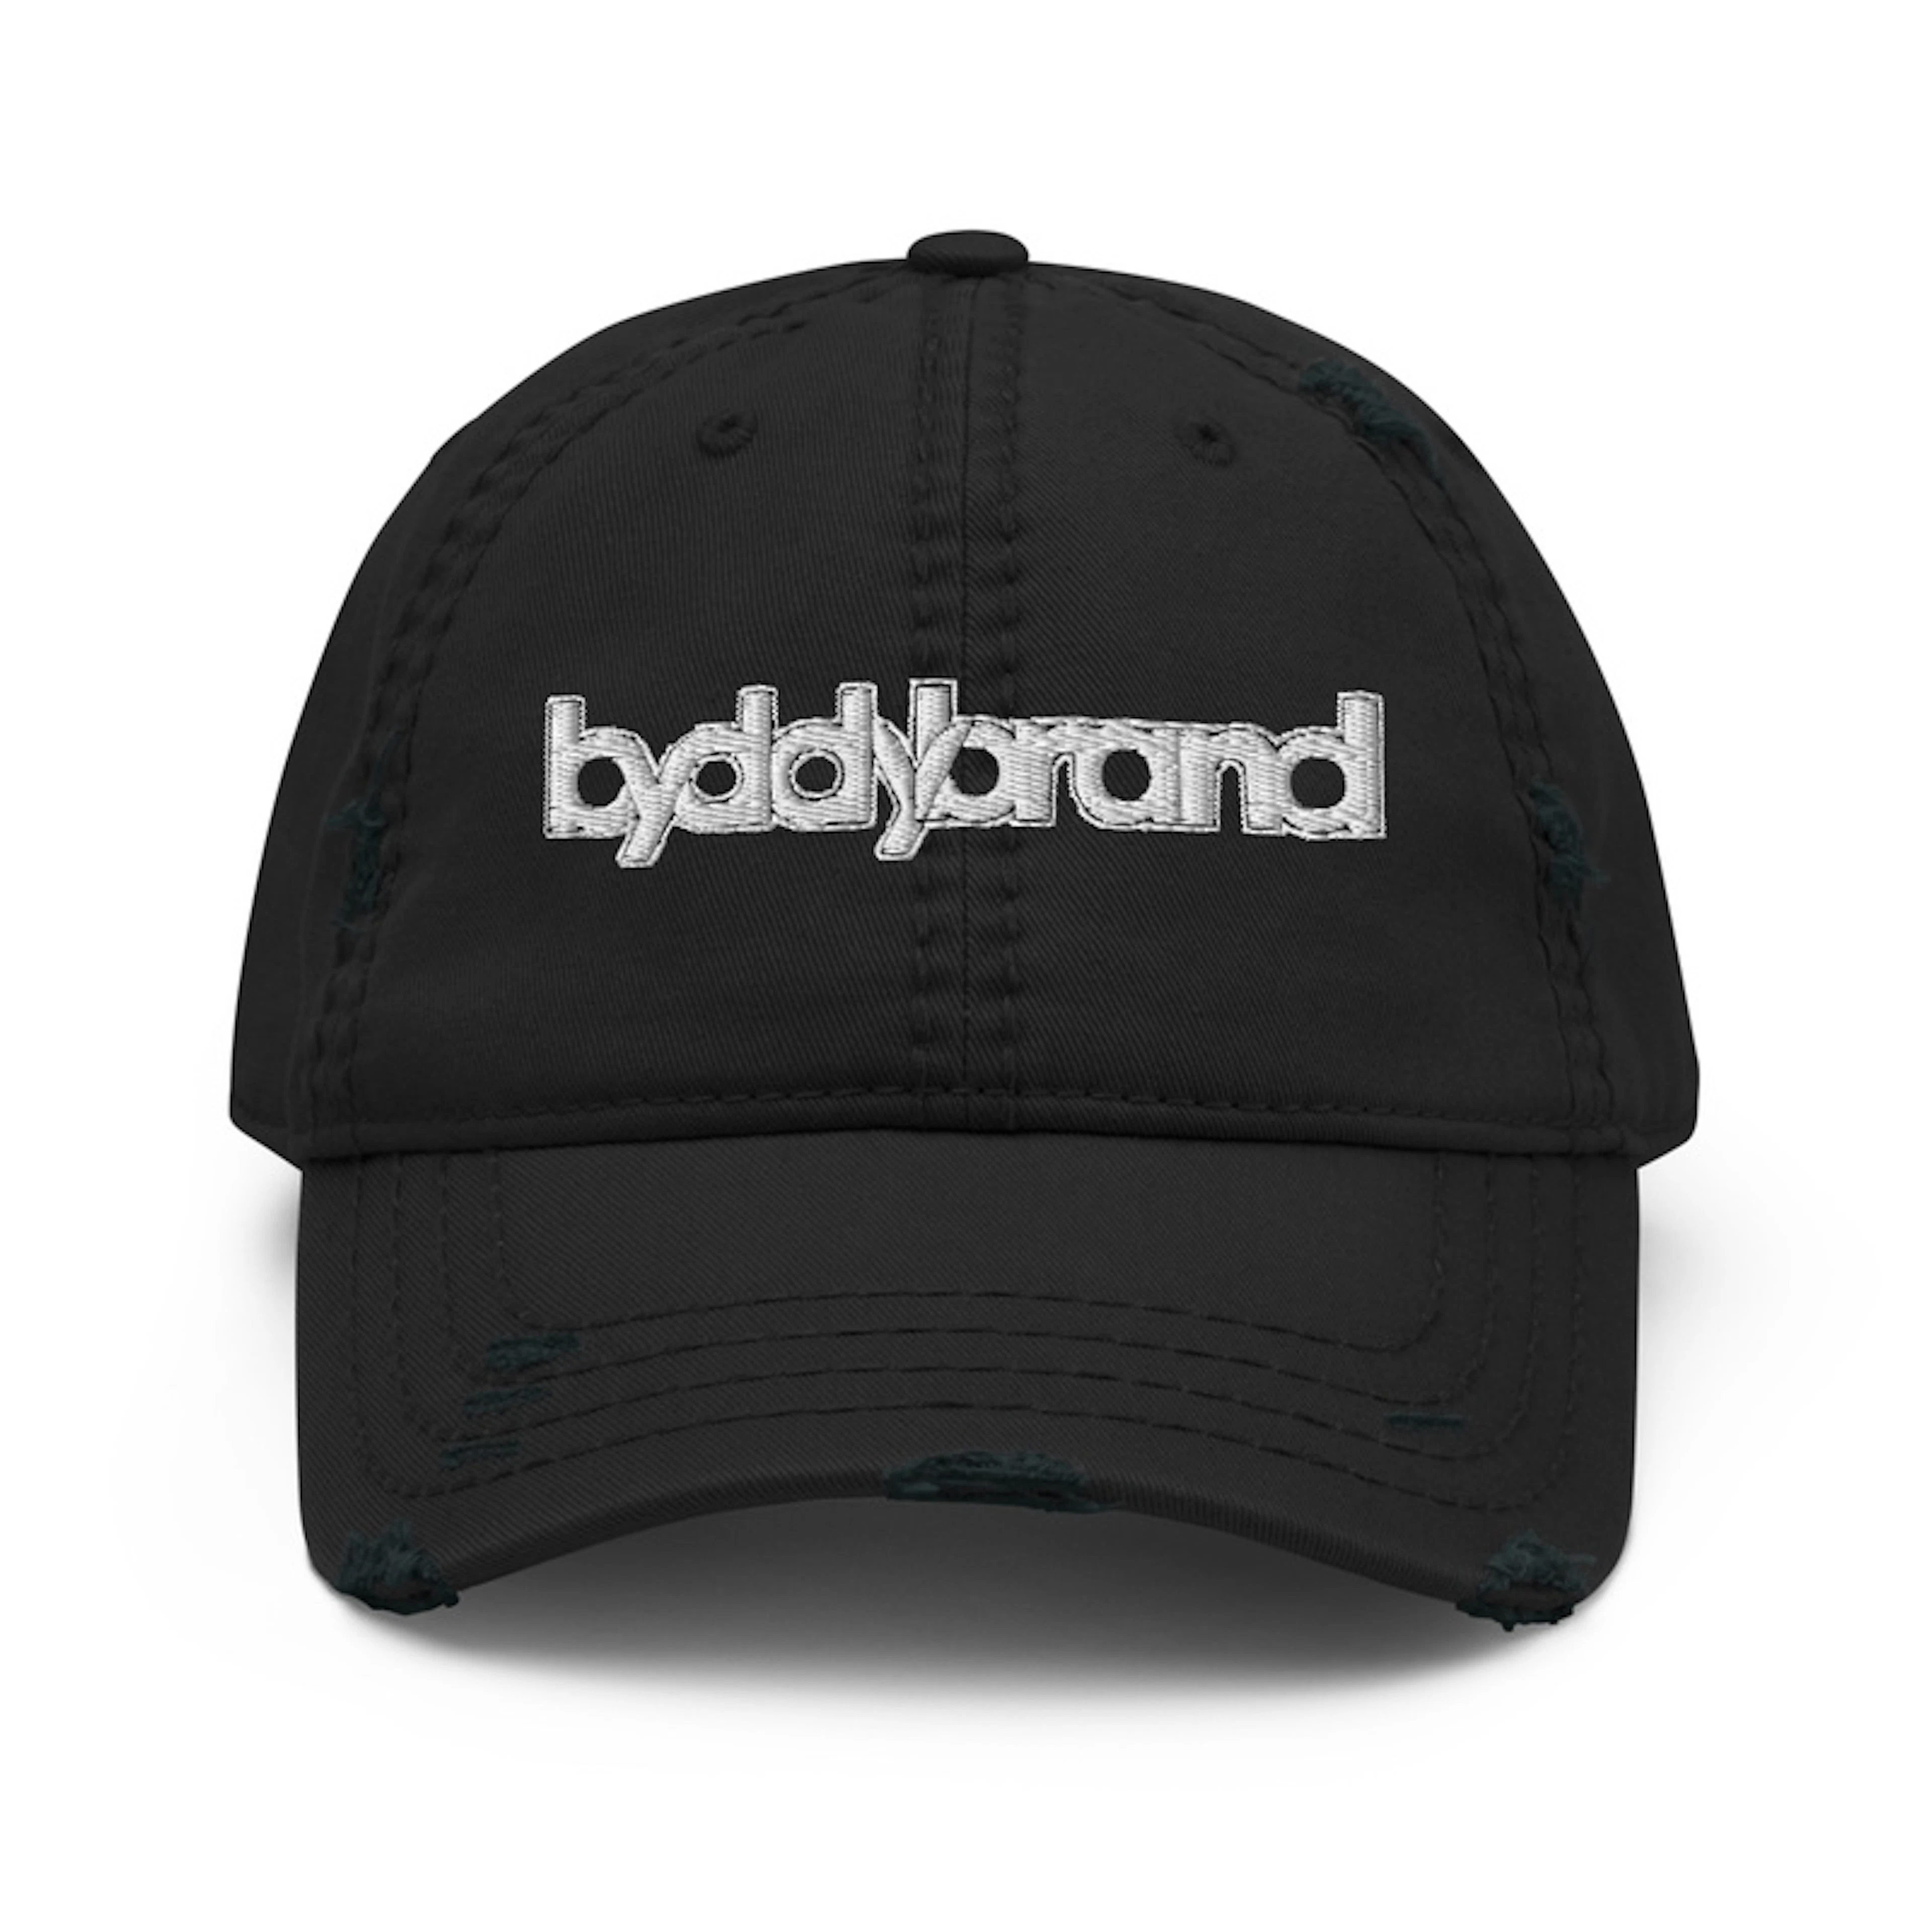 ByddyBillz DAD HAT